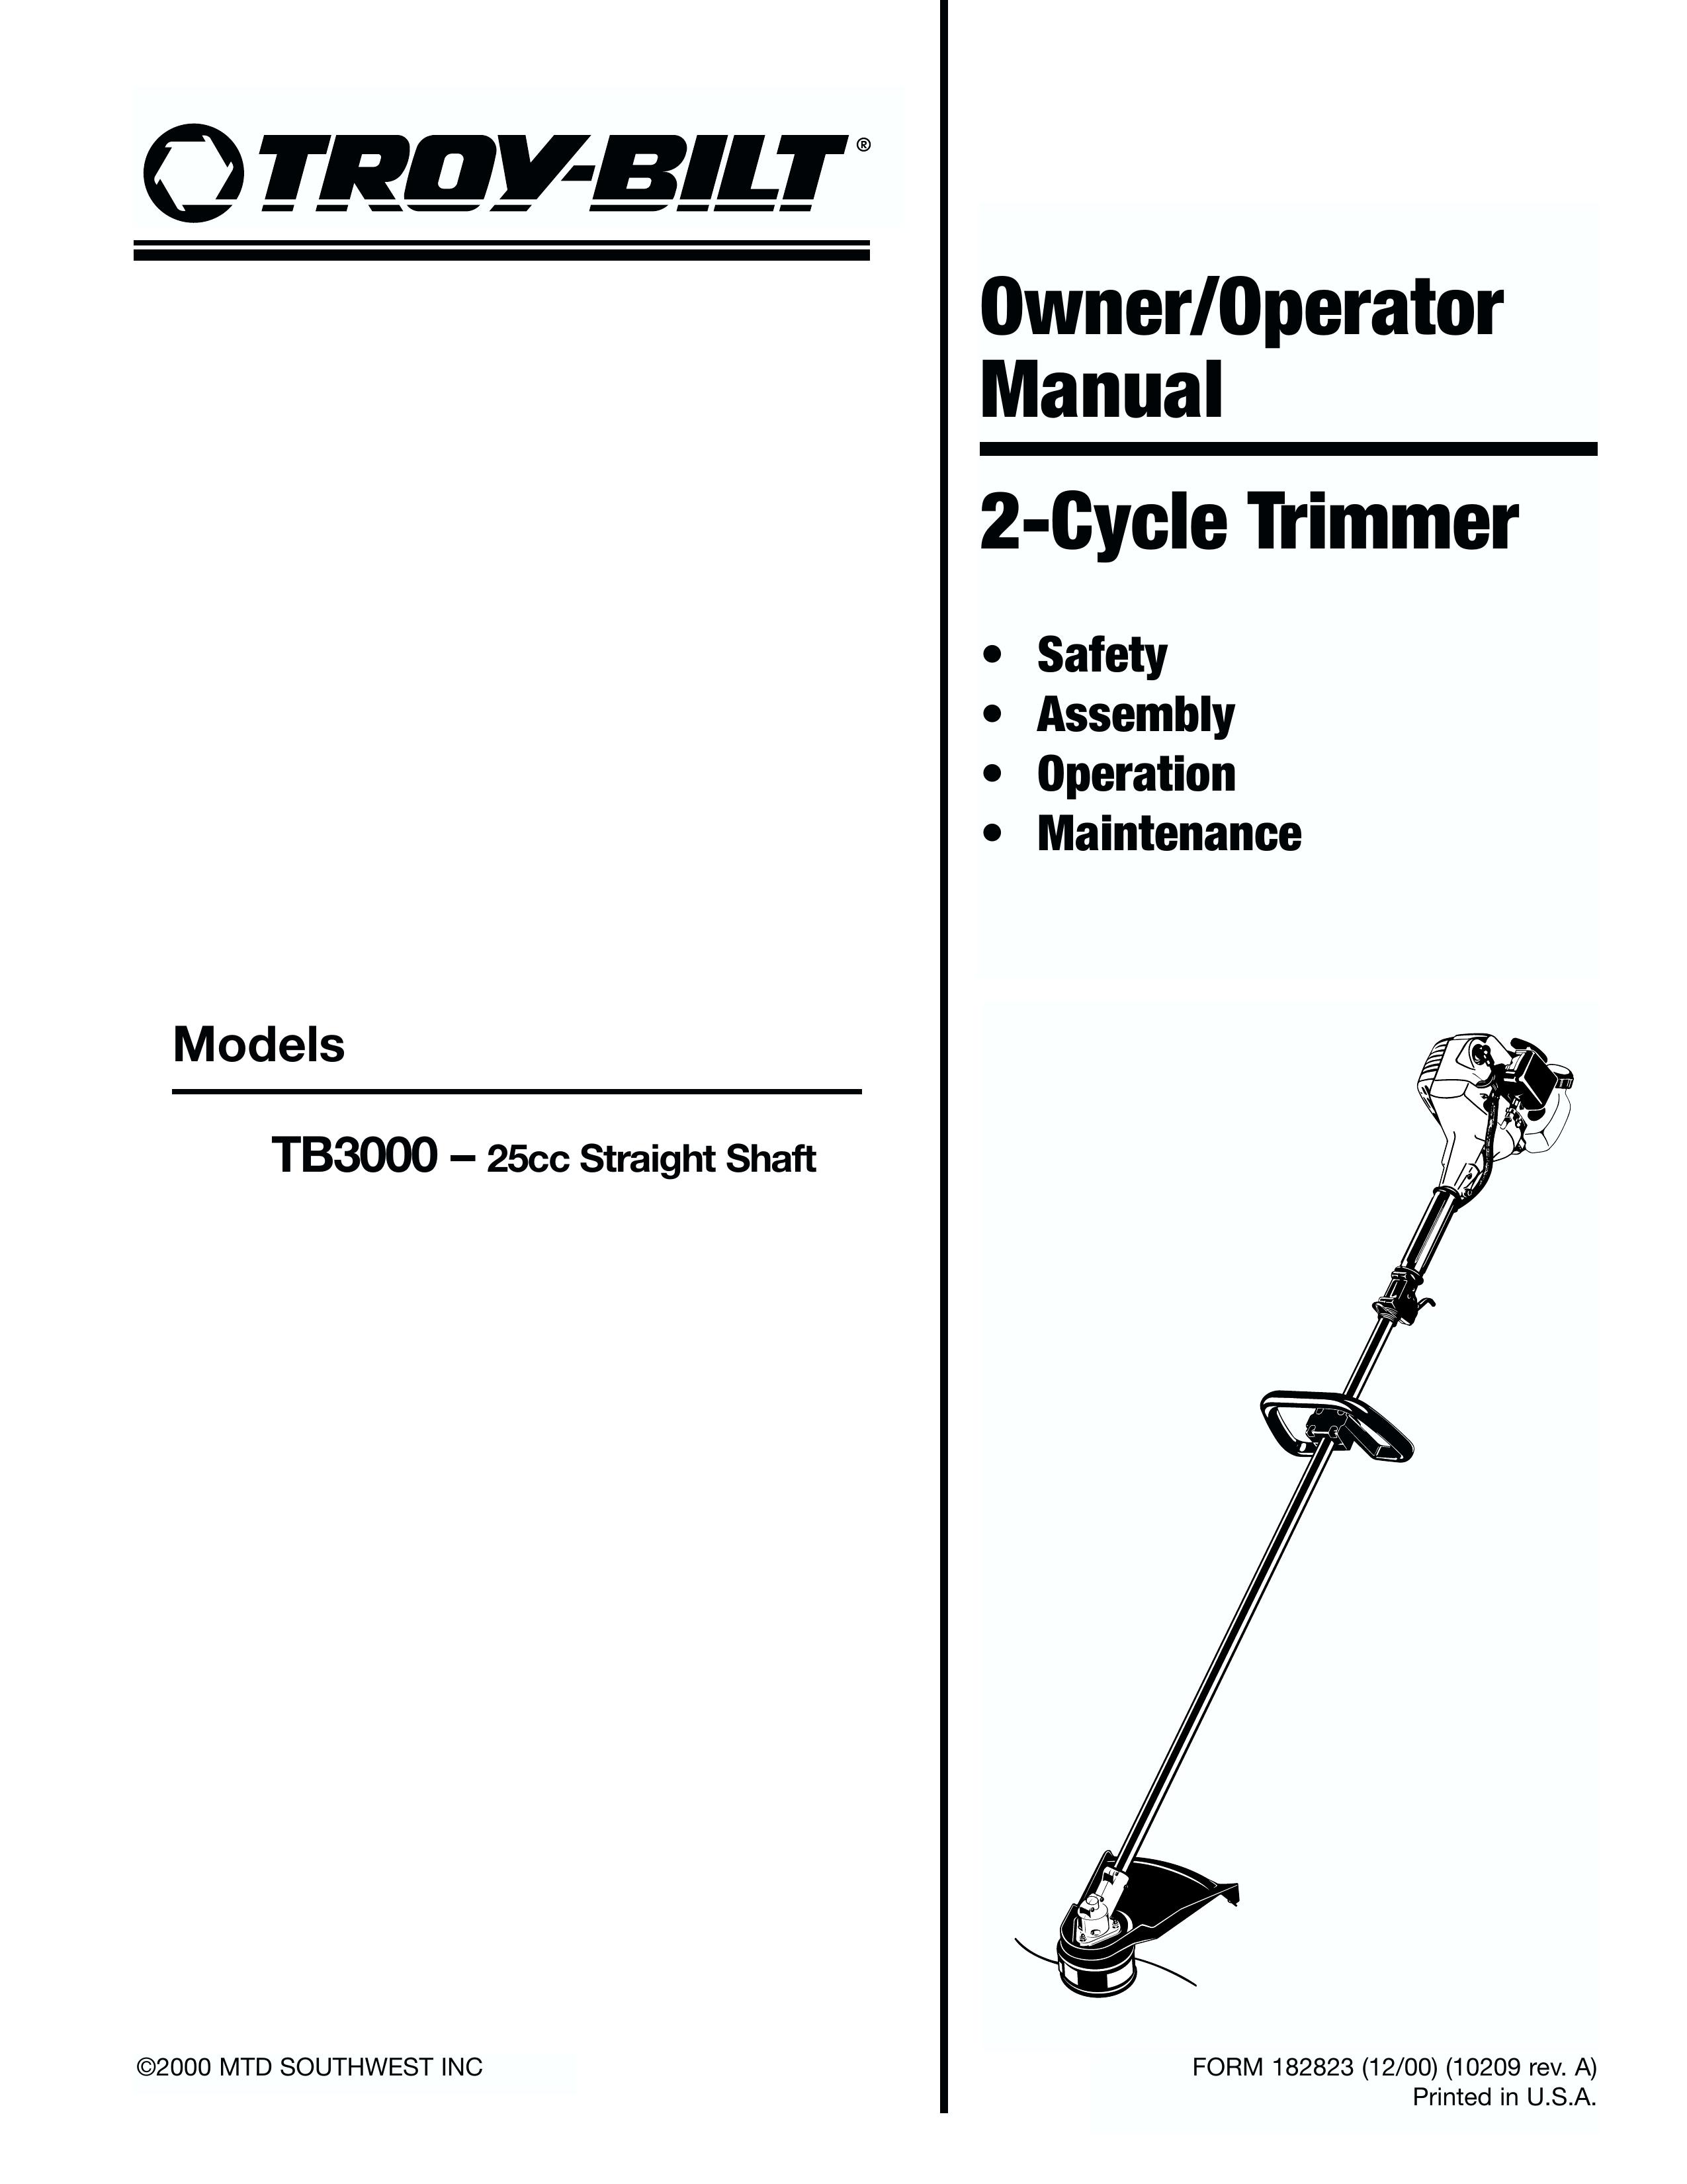 Troy-Bilt TB3000 Trimmer User Manual